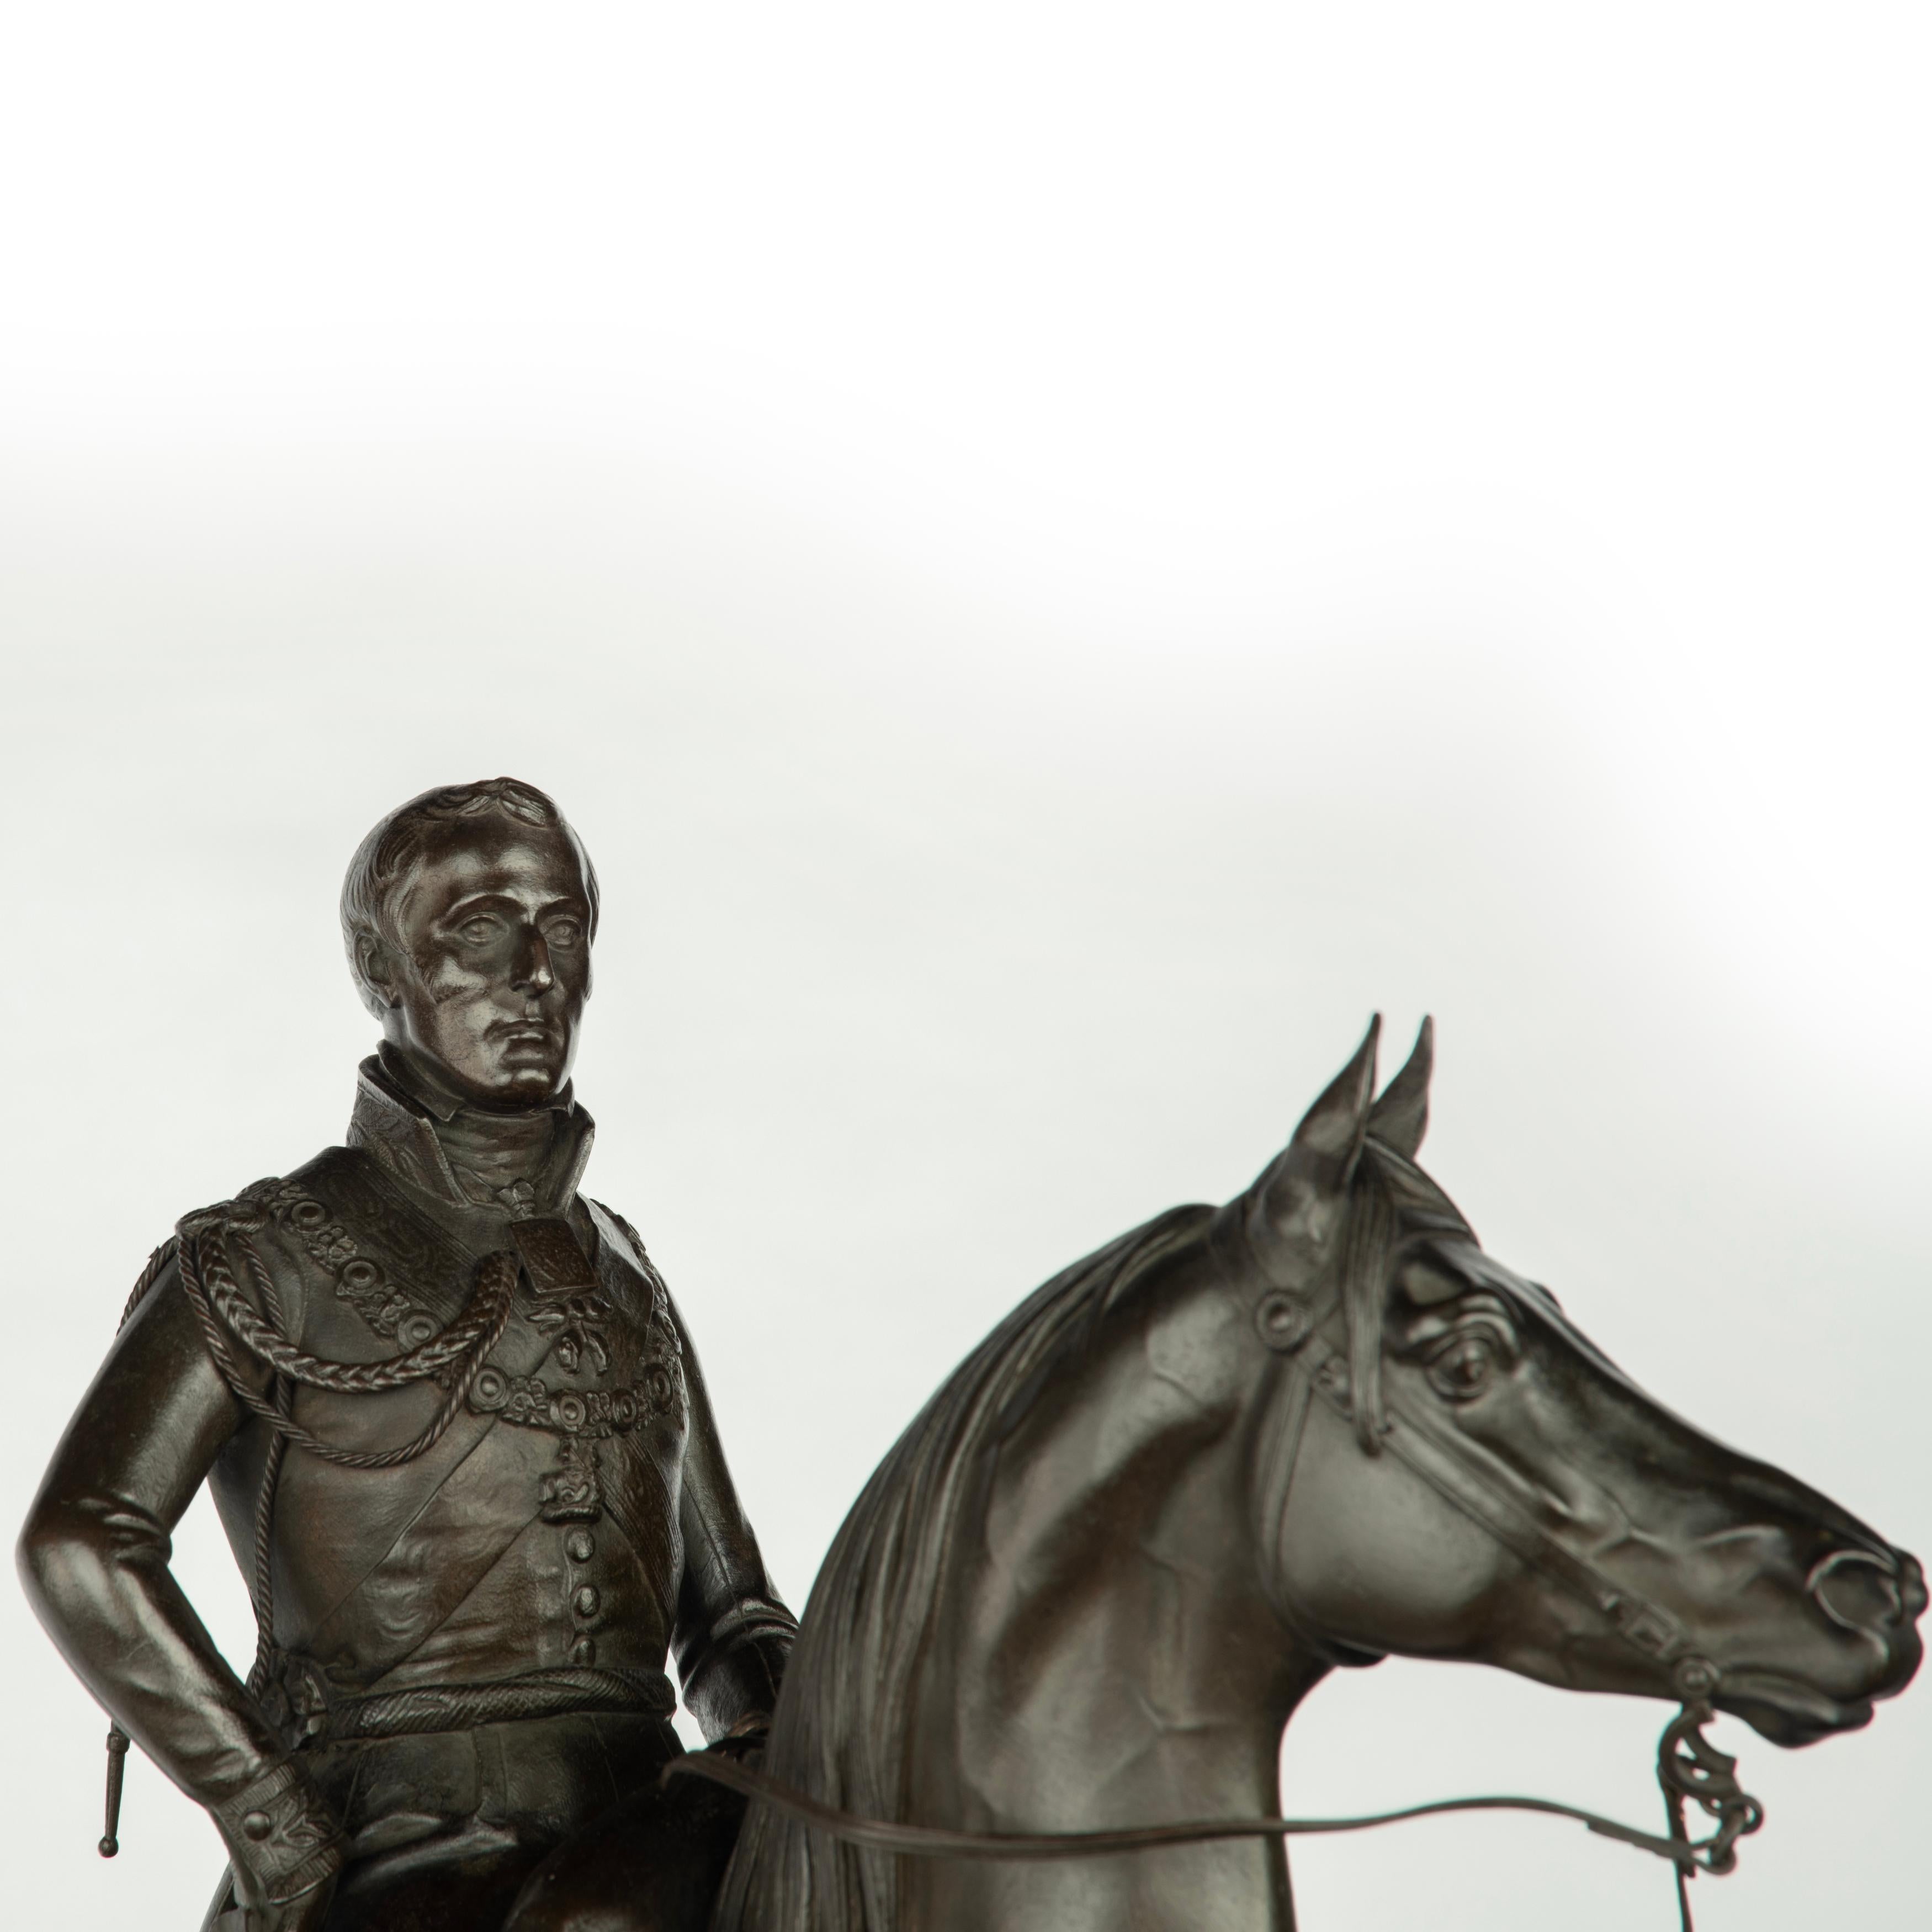 An equestrian statuette of the Duke of Wellington by Morel after Marochetti 1